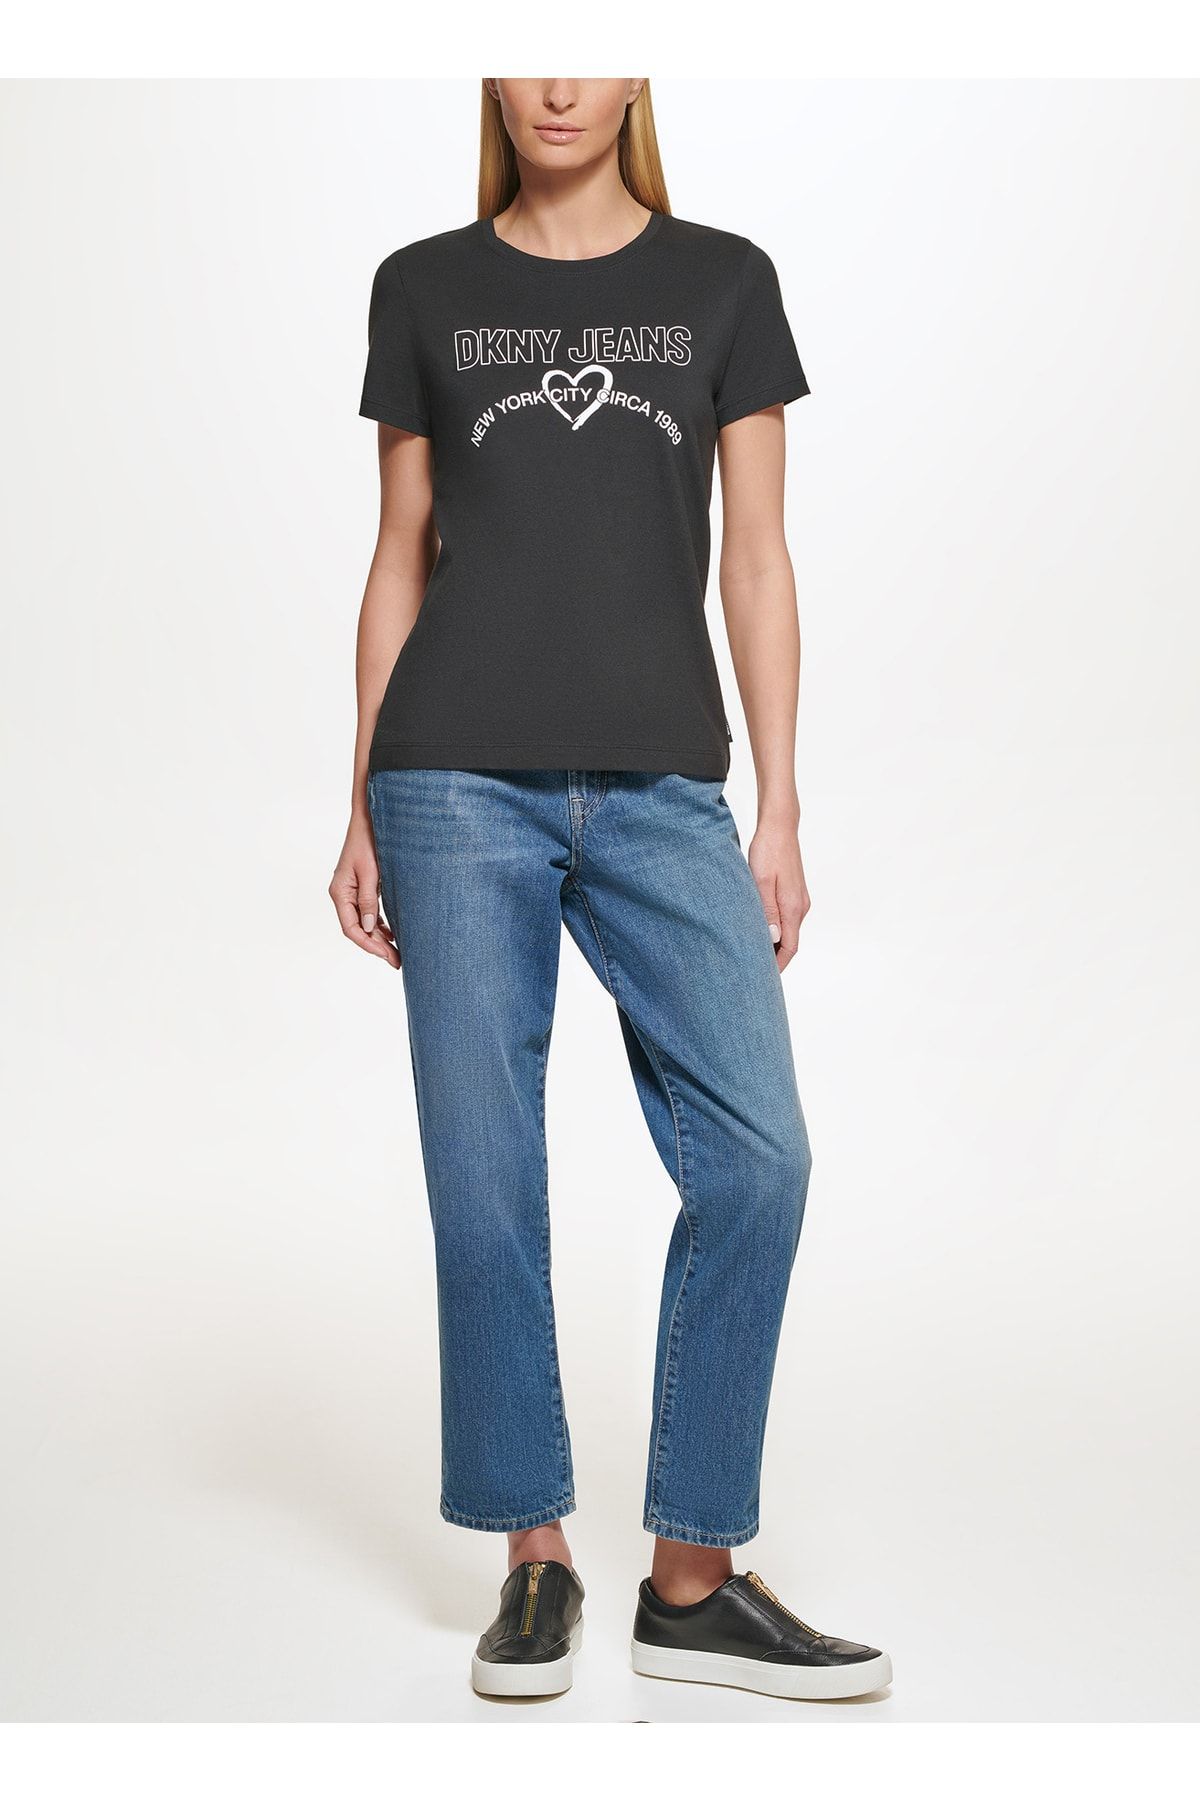 Dkny Jeans Bisiklet Yaka Baskılı Siyah Kadın T-shirt E22fldna